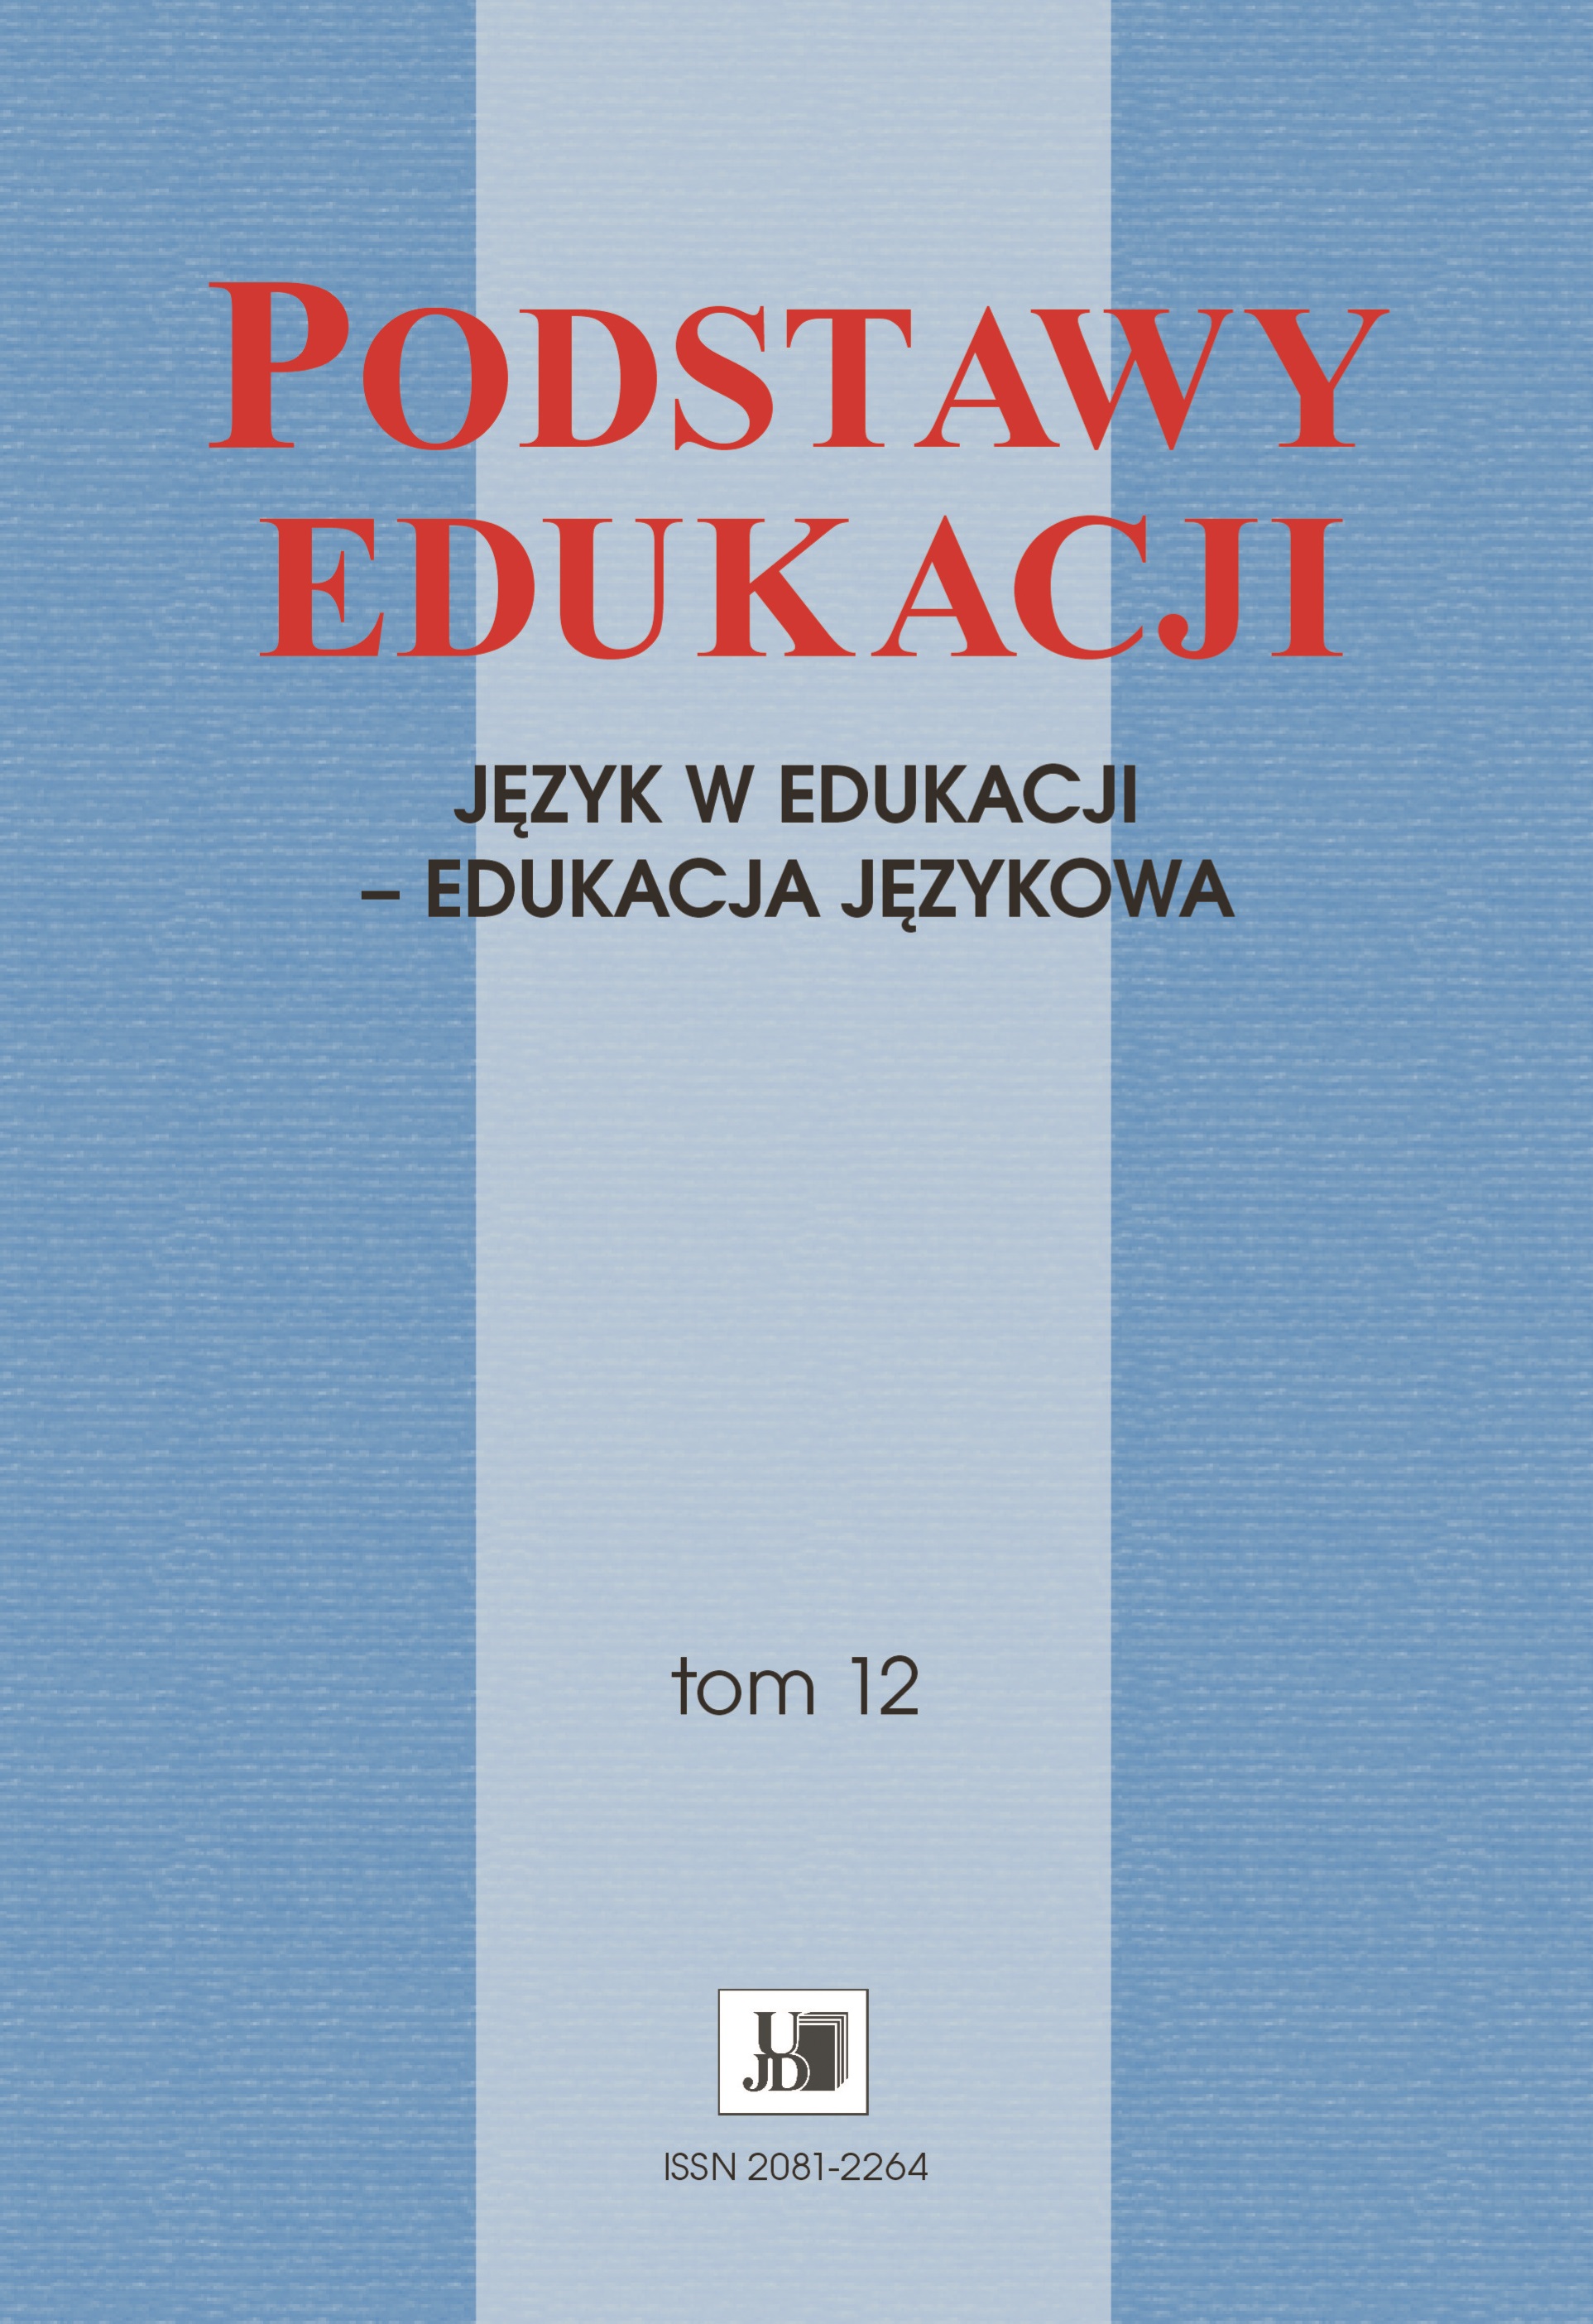 Fundamentals of Education. Language in education - language education Cover Image